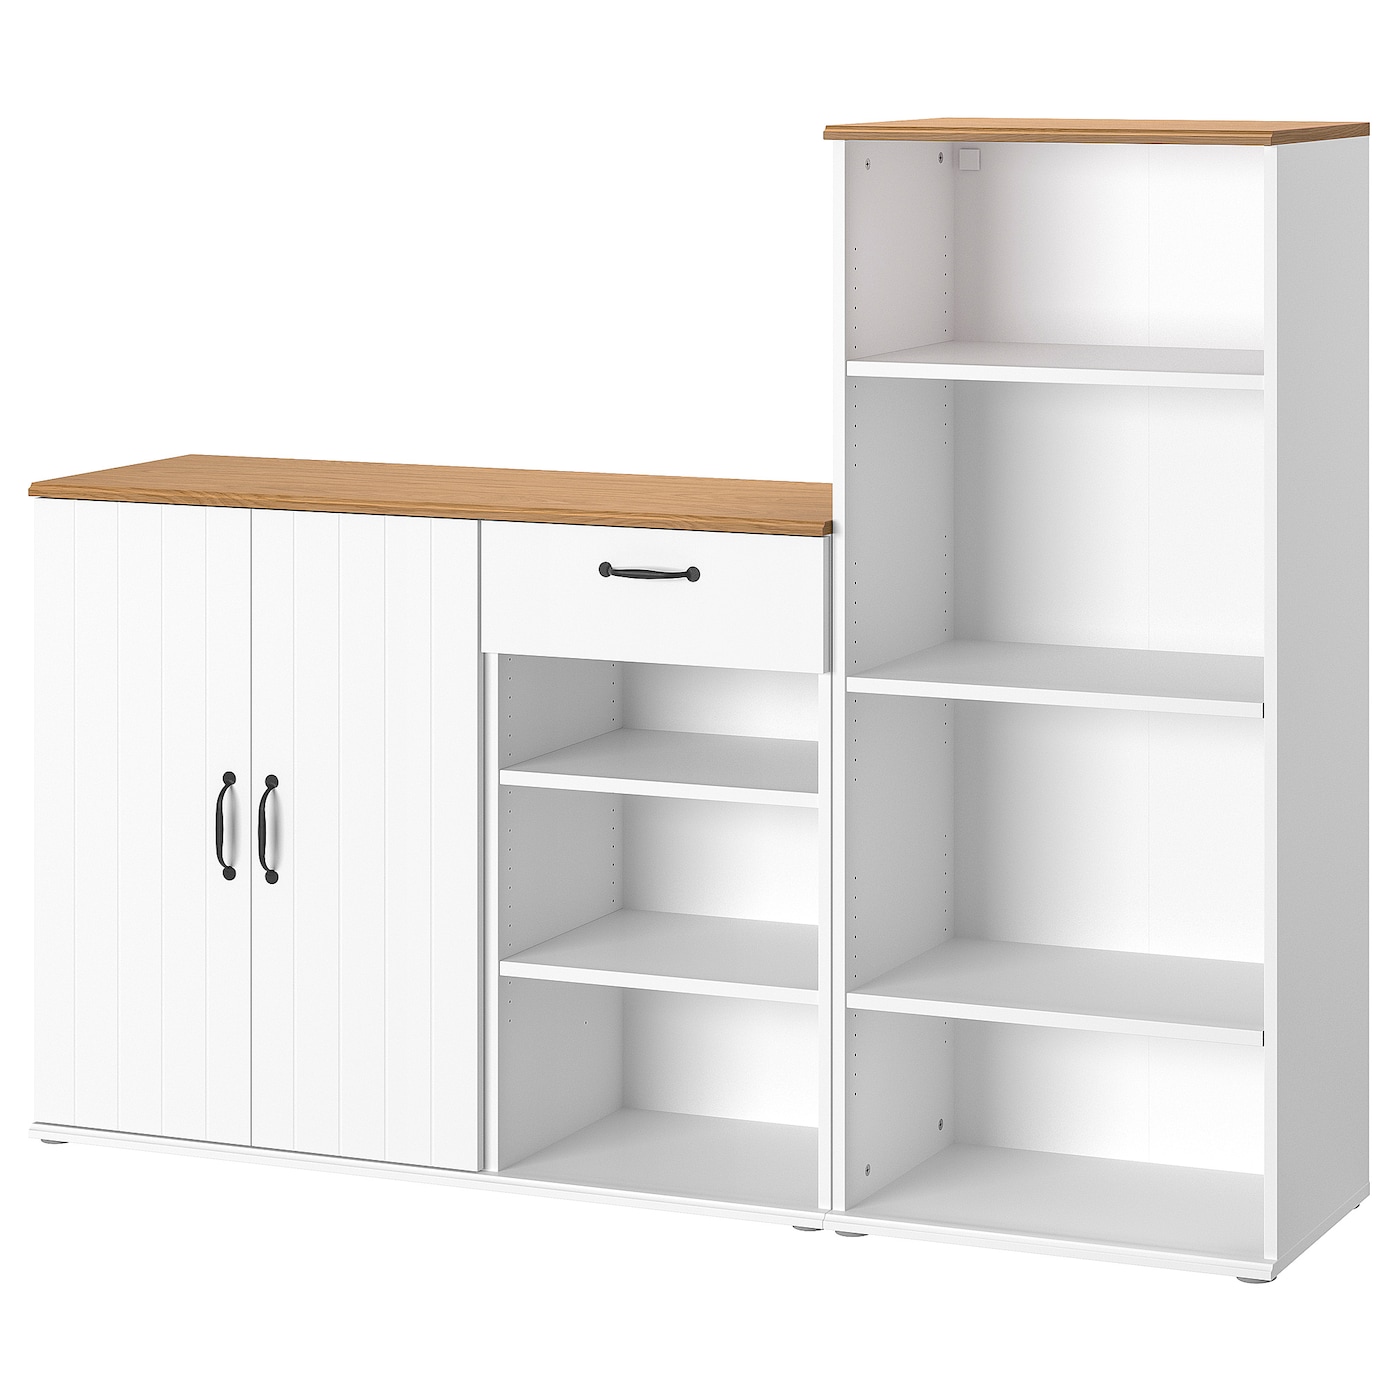 Шкаф - SKRUVBY  IKEA/ СКРУВБИ ИКЕА, 180х140 см, белый/под беленый дуб